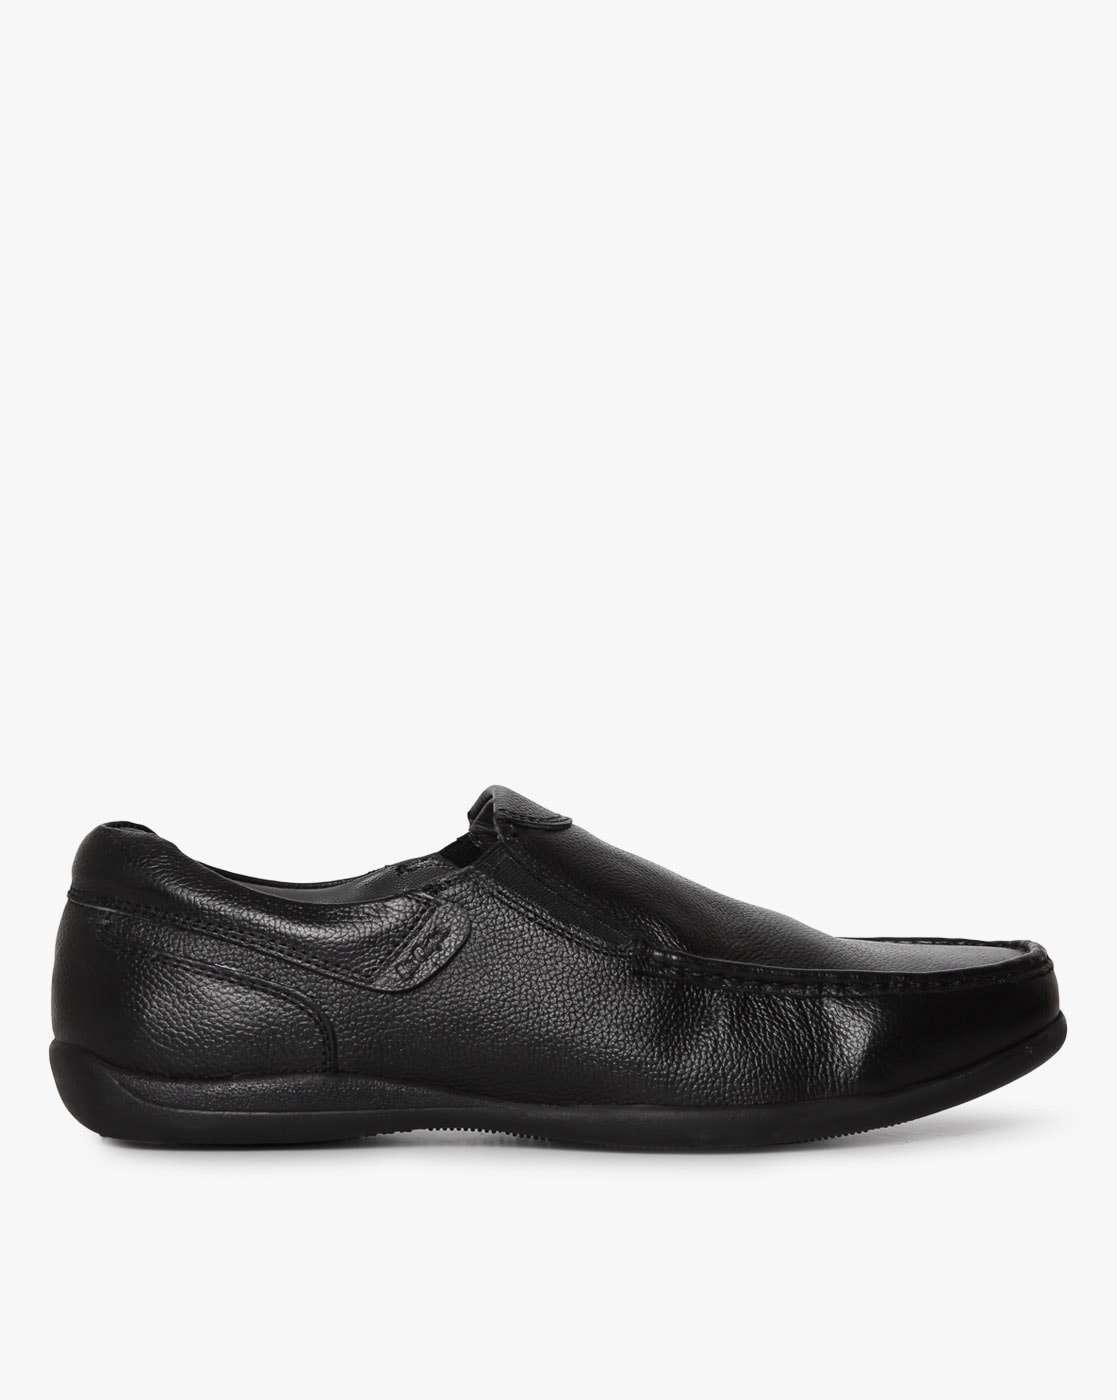 Formal Shoes for Men by Lee Cooper 